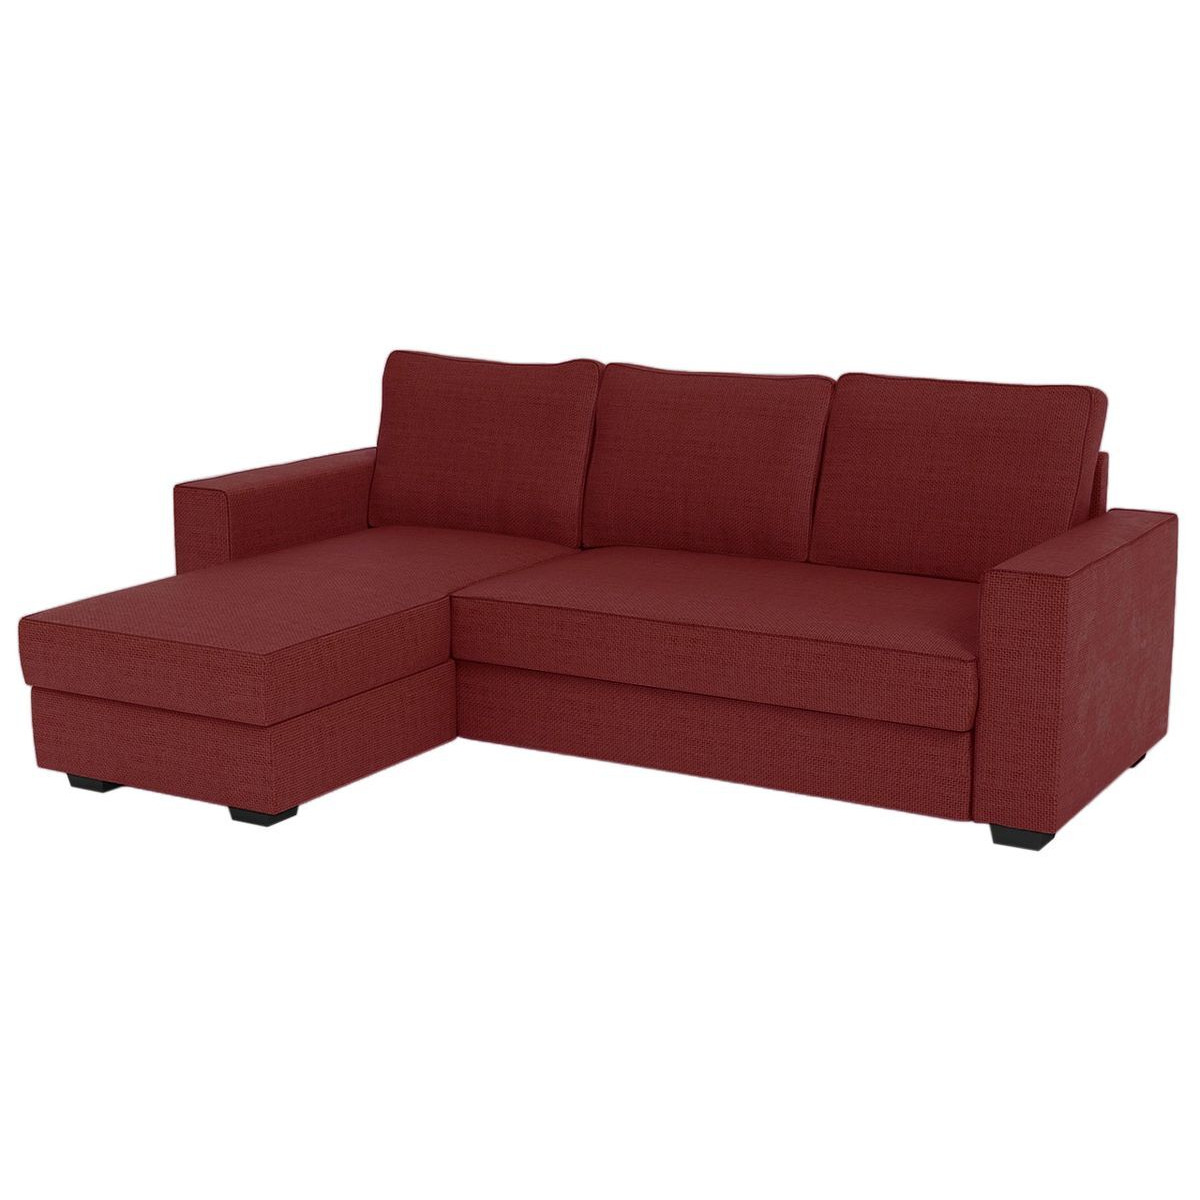 Milan Corner Sofa Bed With Storage, red - image 1